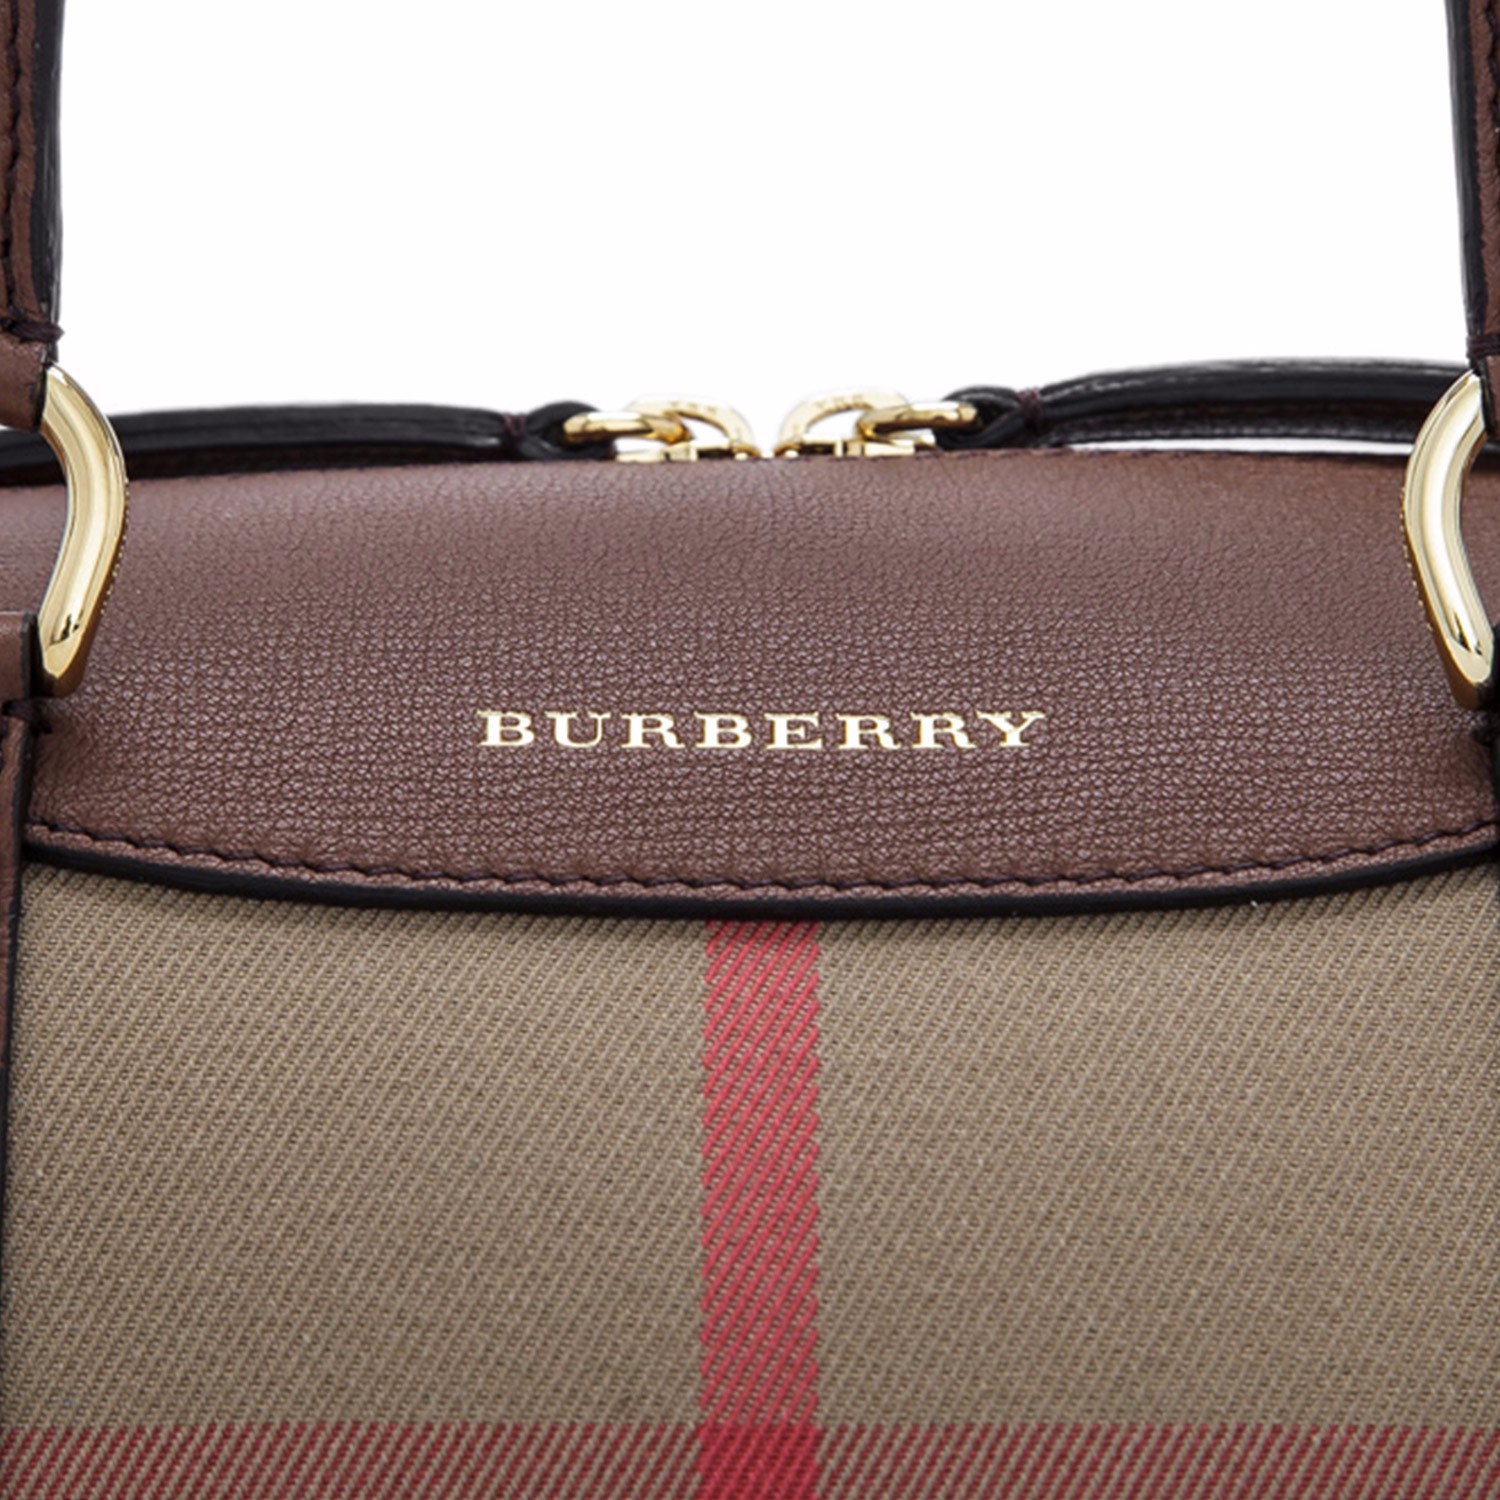 burberry(博柏利) 经典款女士卡其色格纹帆布两用包